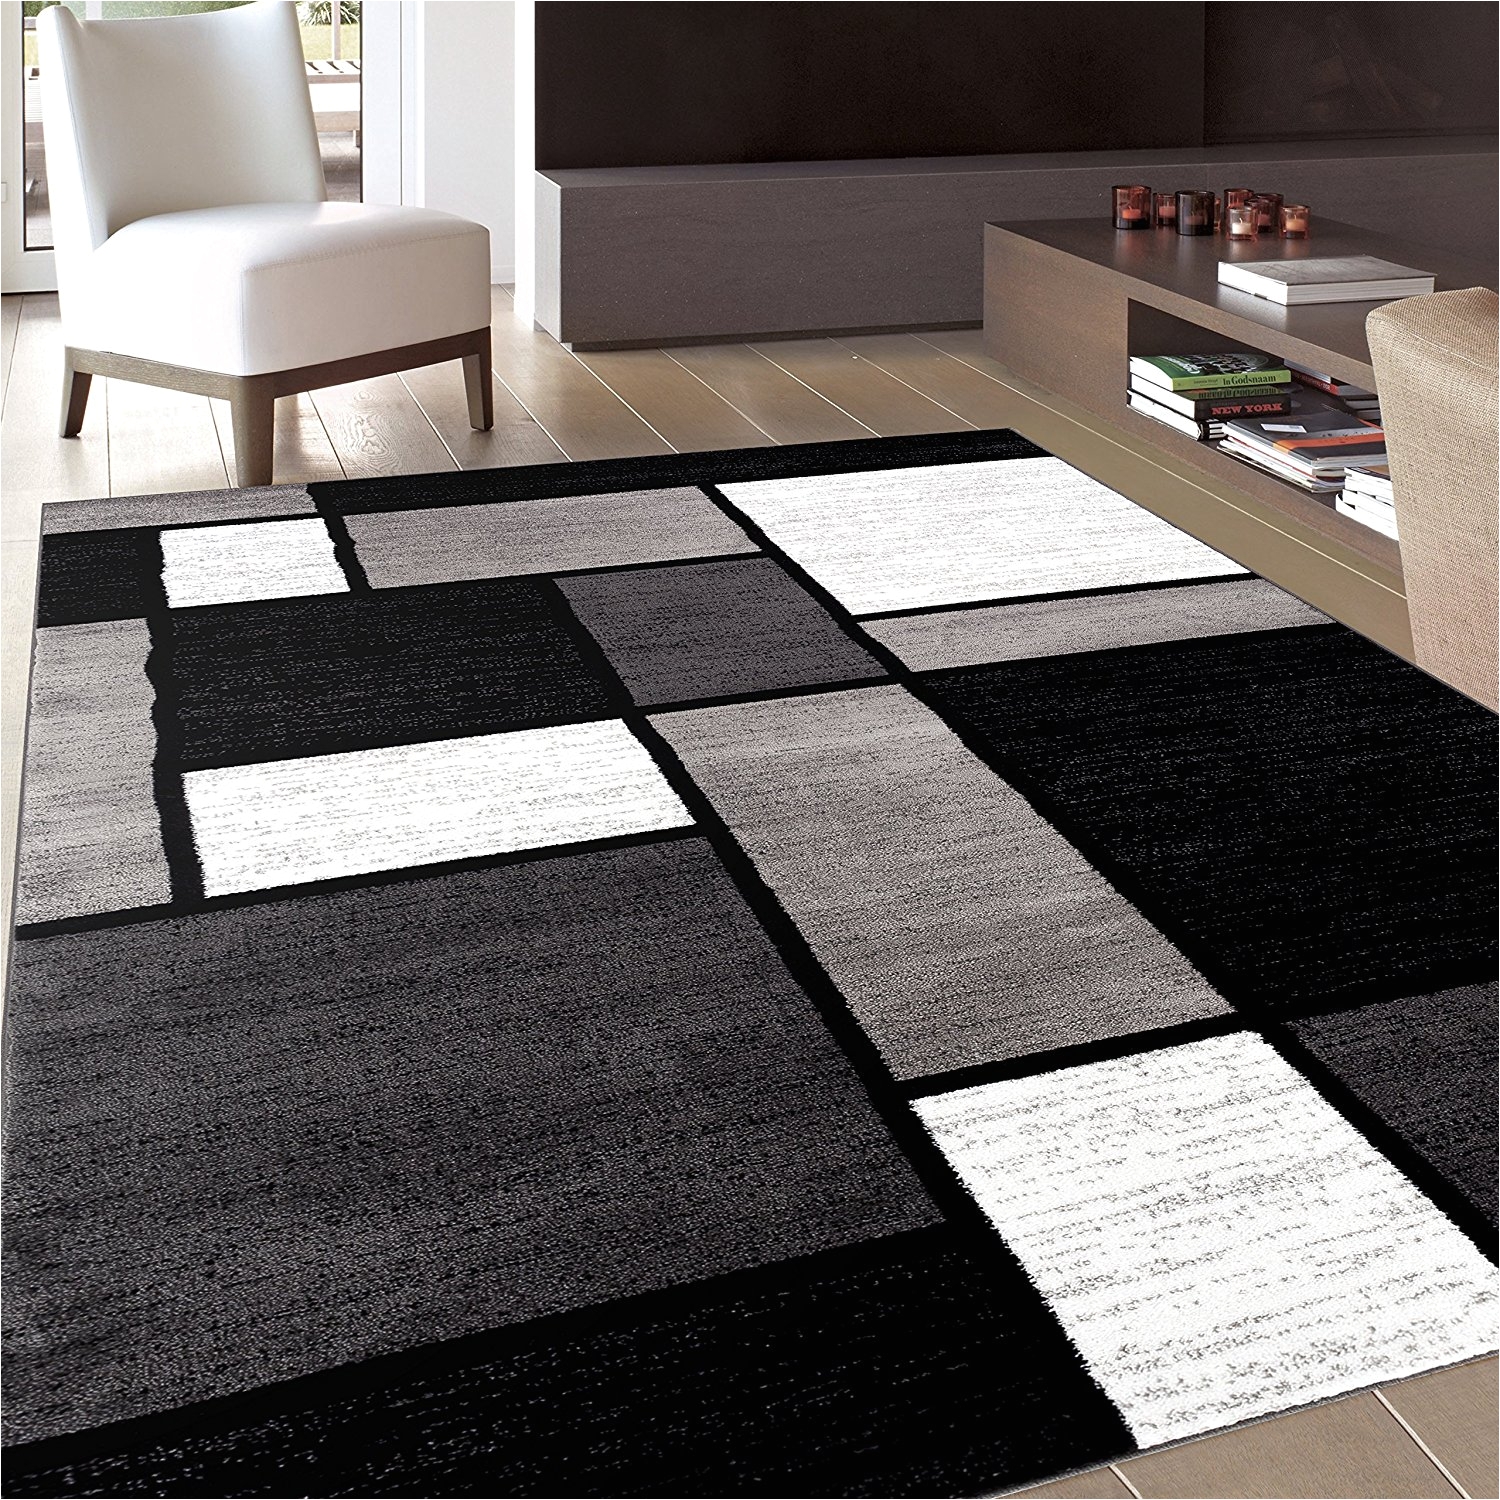 black and white area rugs amazon com rug decor contemporary modern boxes area rug